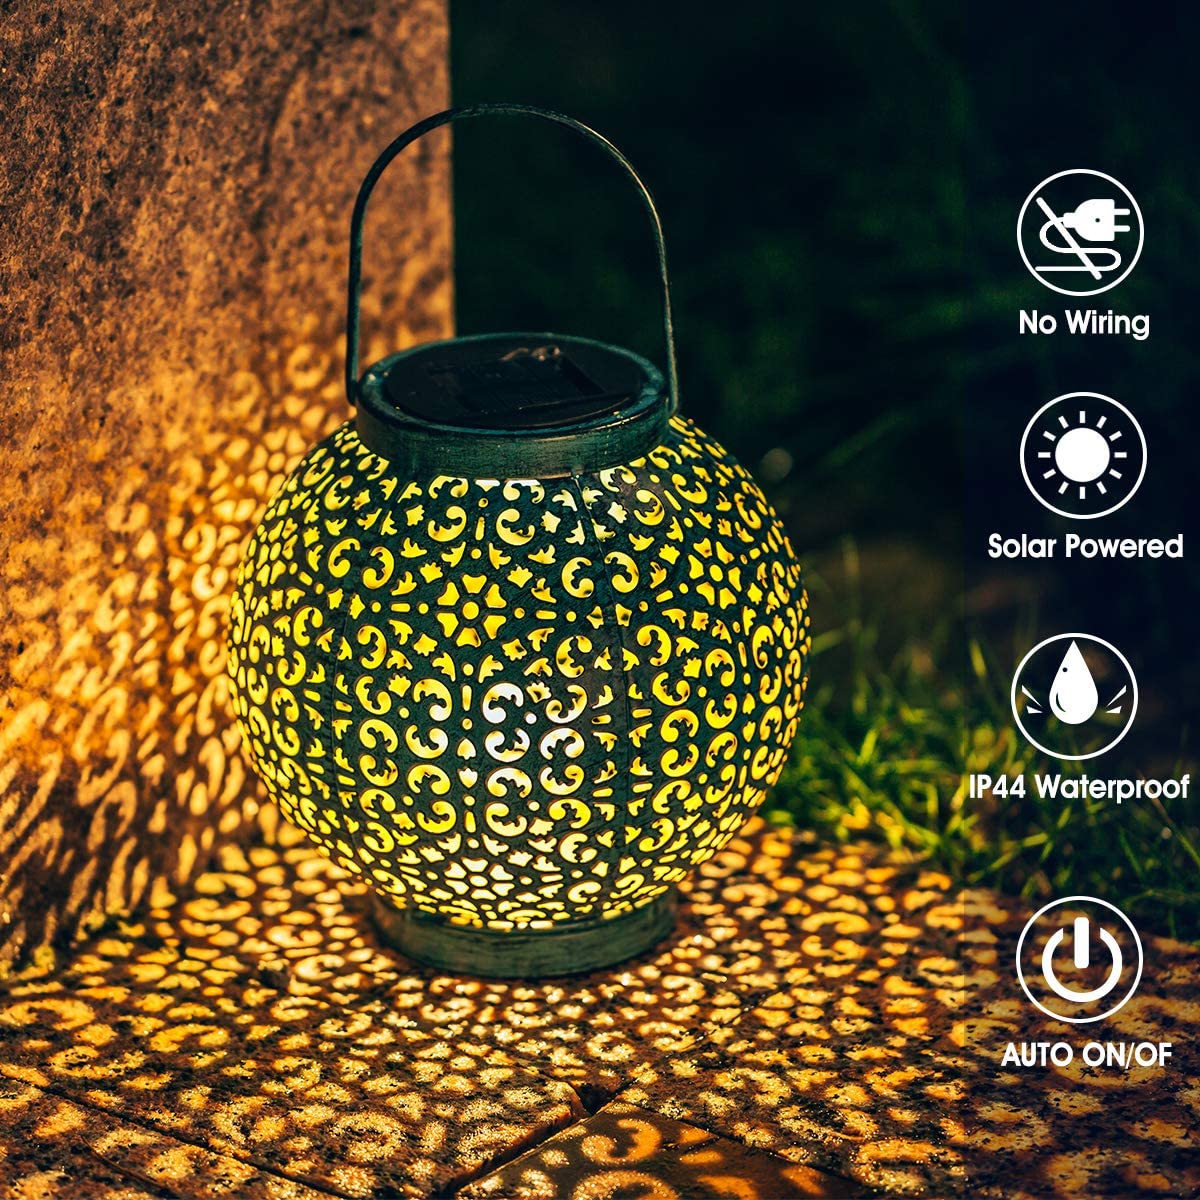 Solar Lanterns Outdoor, 2 Pack Solar Garden Lanterns Waterproof, LED  Hanging Lanterns Solar Powered with Handle, Decorative Retro Metal Solar  Lights